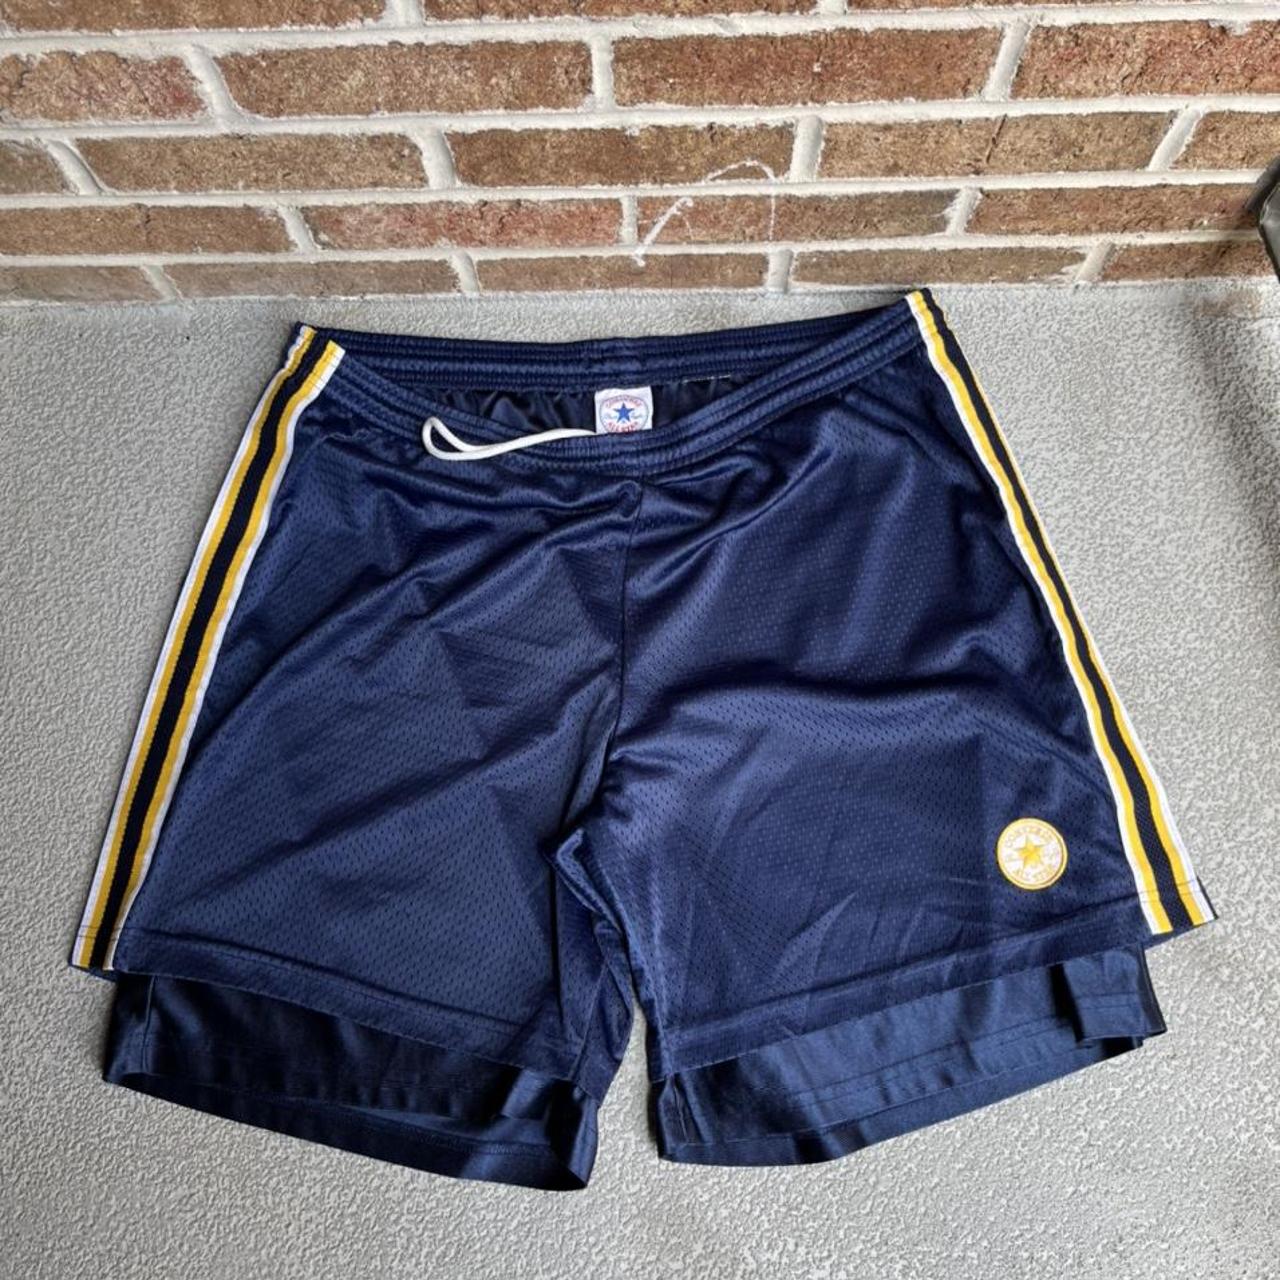 Converse Men's Yellow and Navy Shorts